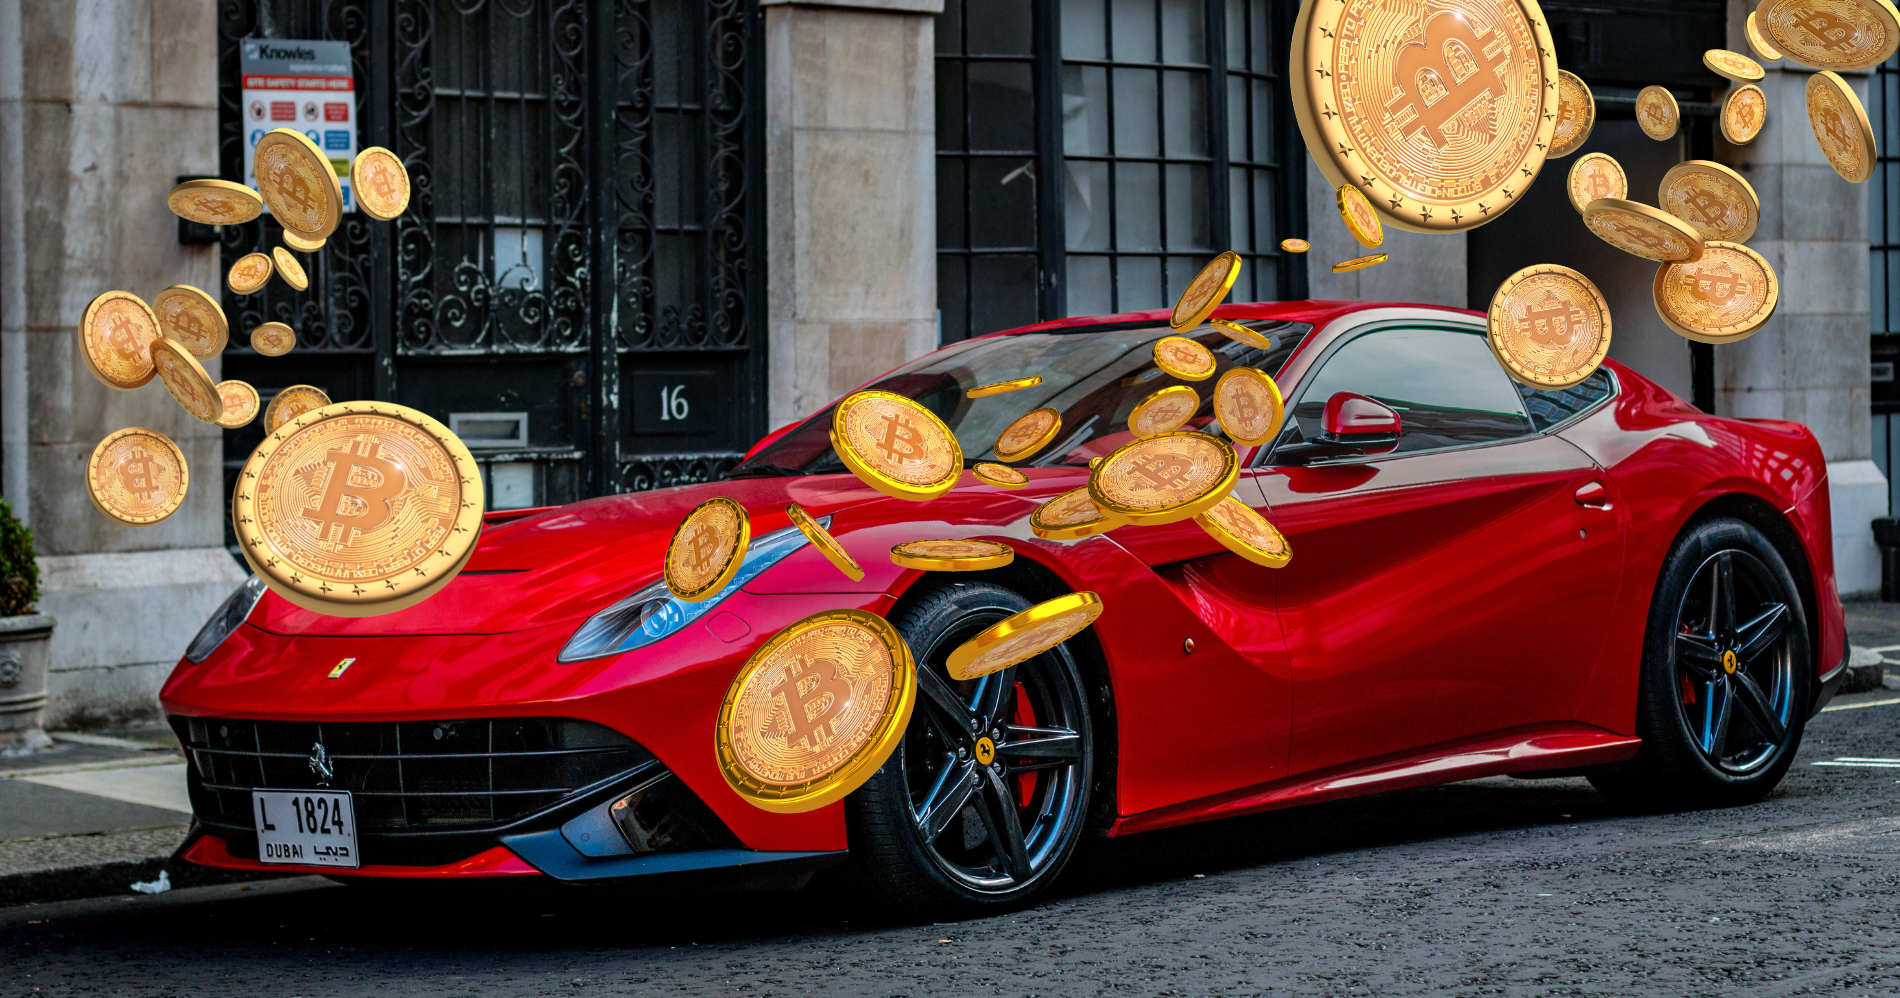 Beli Ferrari Pakai Bitcoin, Pria Ini Malah Dipenjara 18 Bulan (Ilustrasi: Canva)